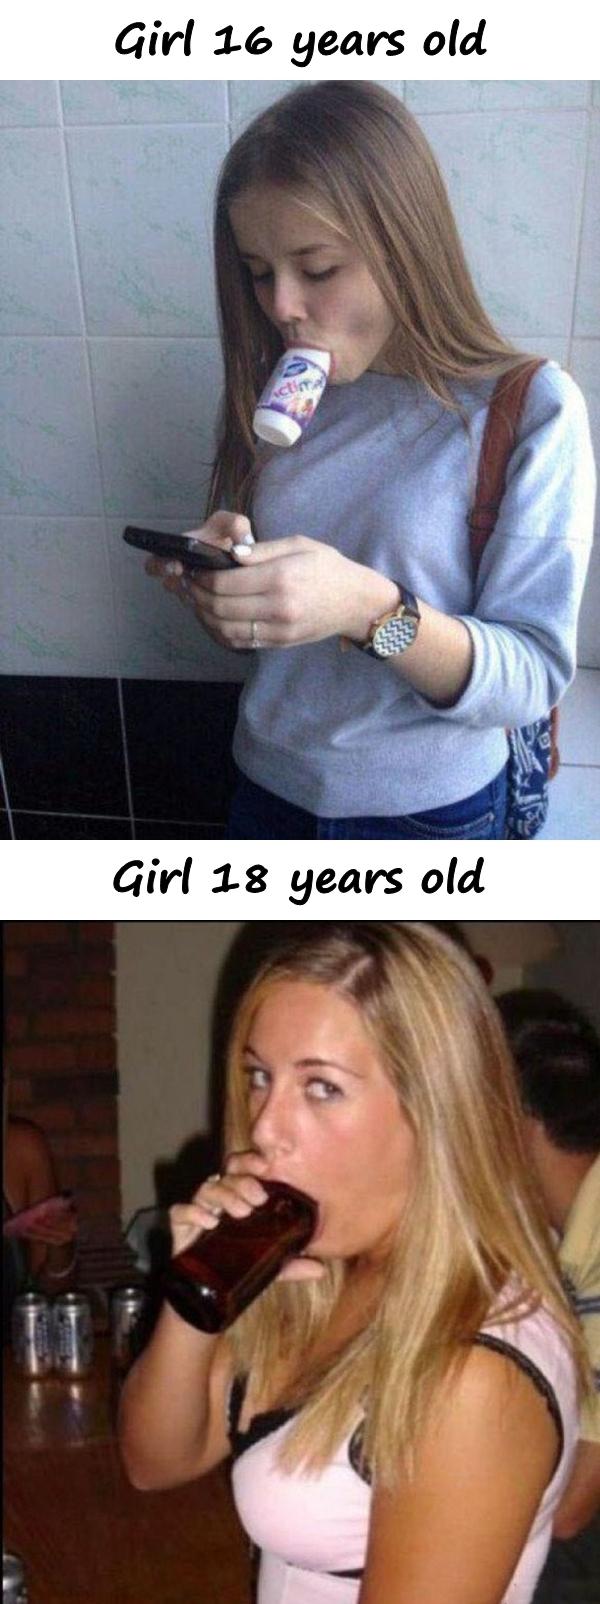 Girl 16 years old vs. girl 18 years old